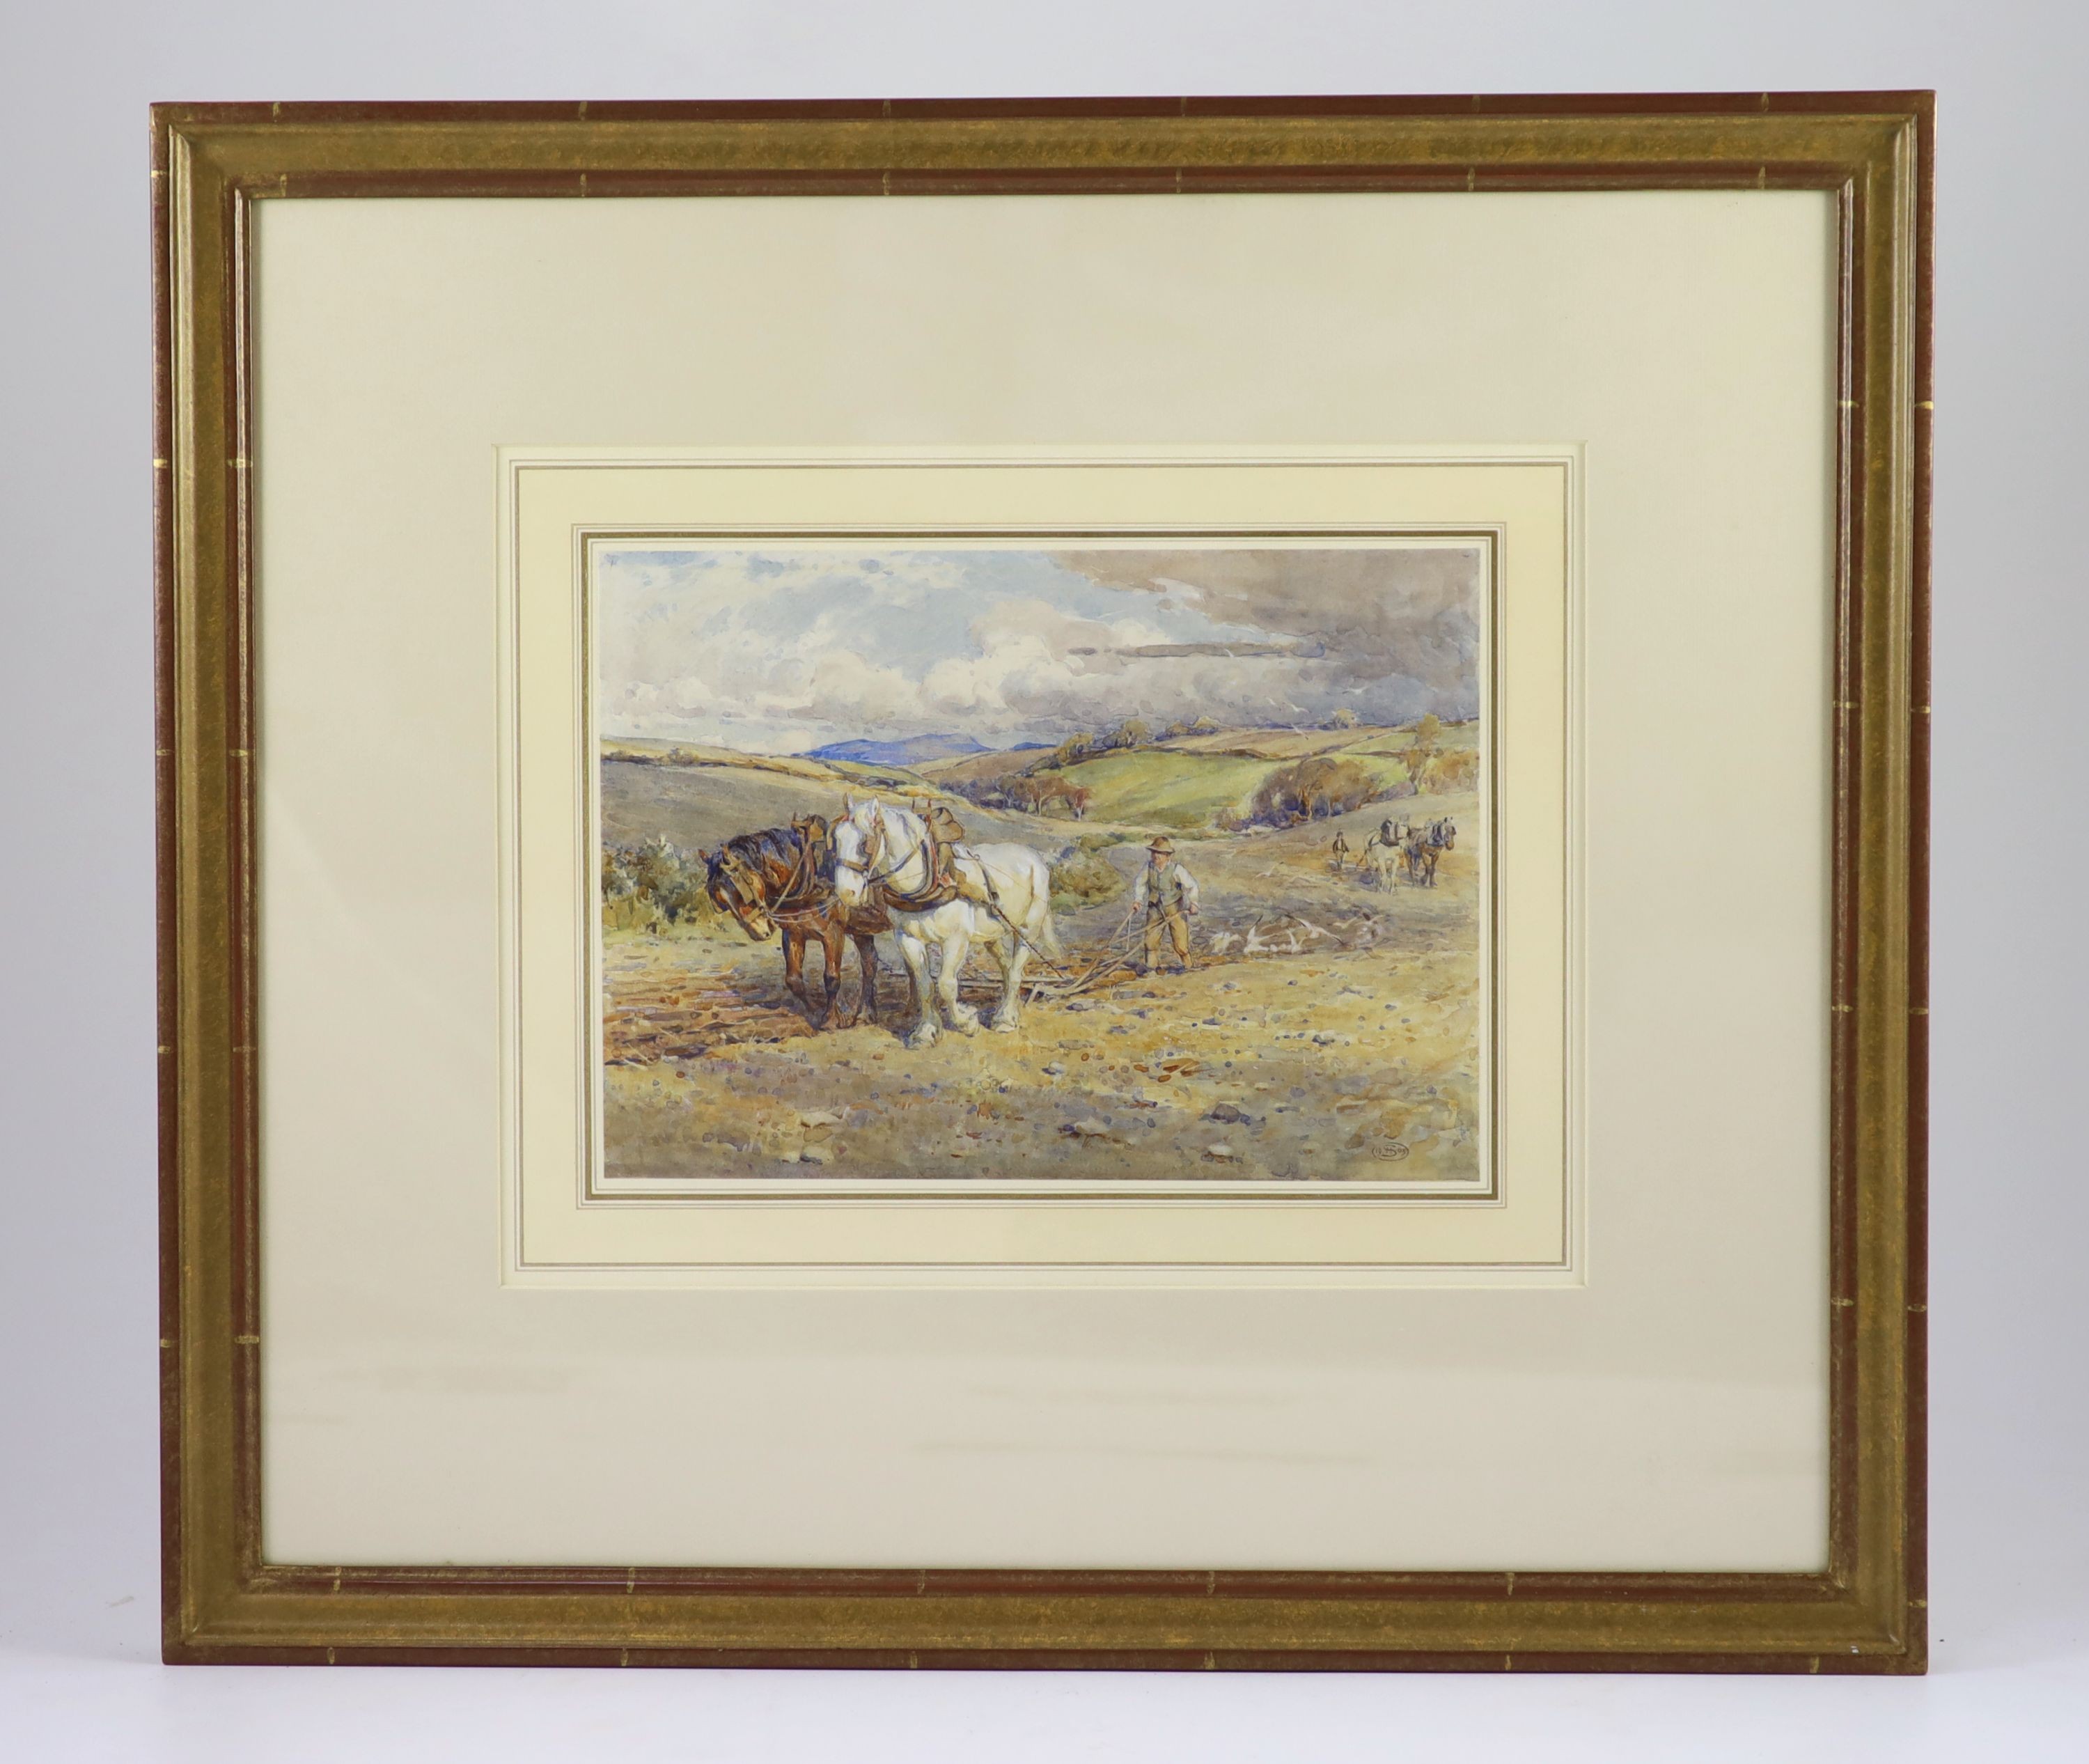 Joseph Harold Swanwick (1866-1929), 'Ploughing', pencil and watercolour, 18 x 25cm